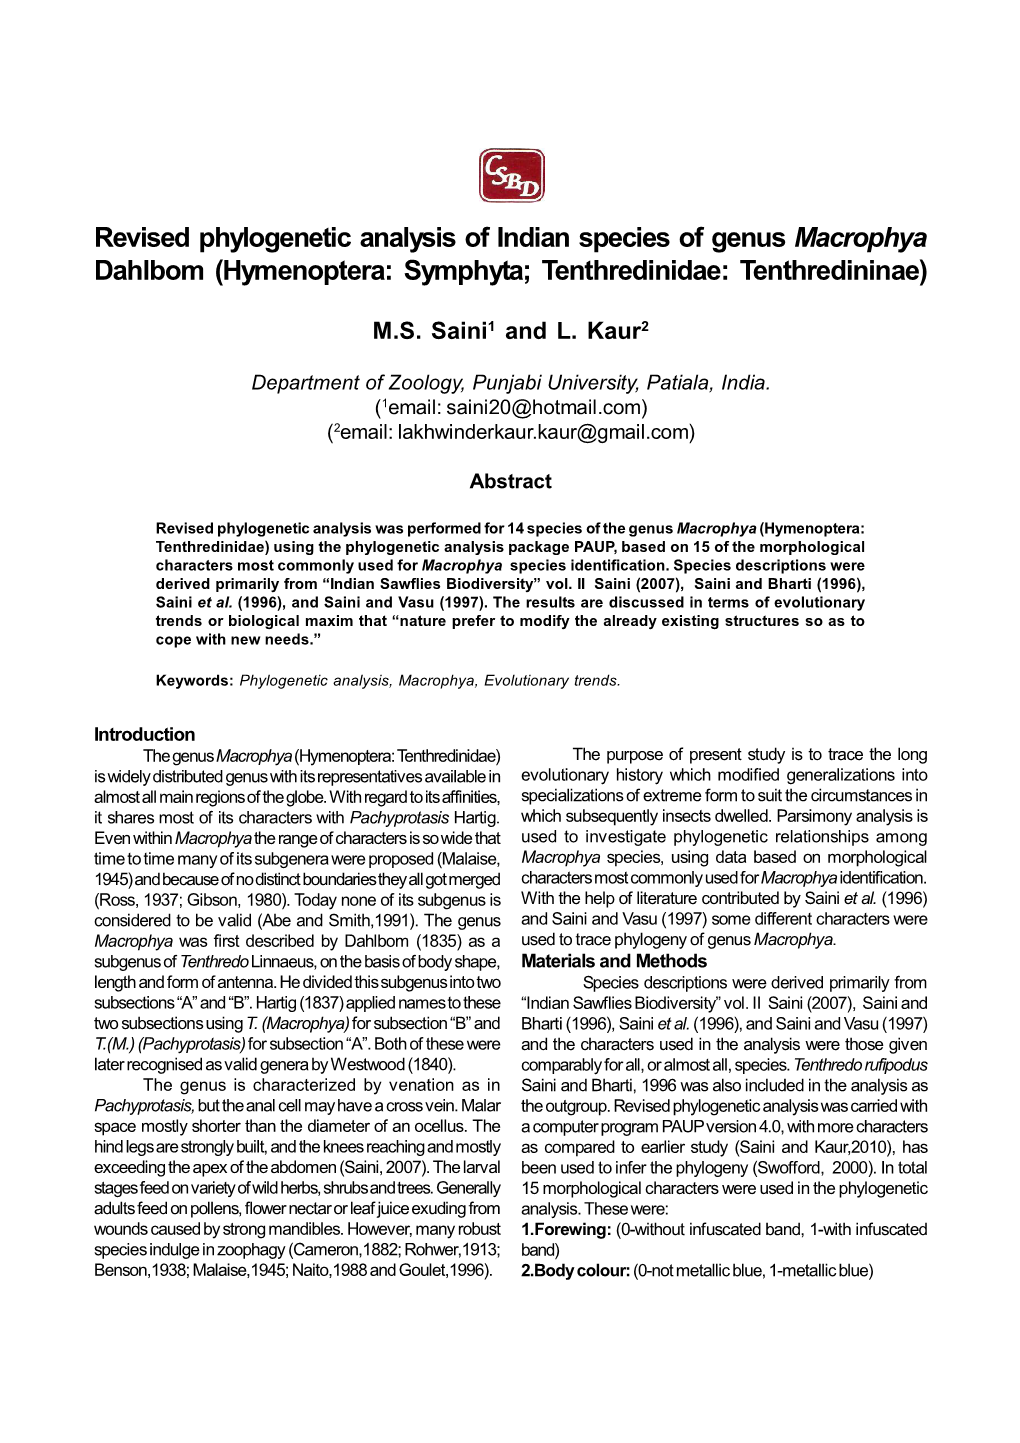 Revised Phylogenetic Analysis of Indian Species of Genus Macrophya Dahlbom (Hymenoptera: Symphyta; Tenthredinidae: Tenthredininae)